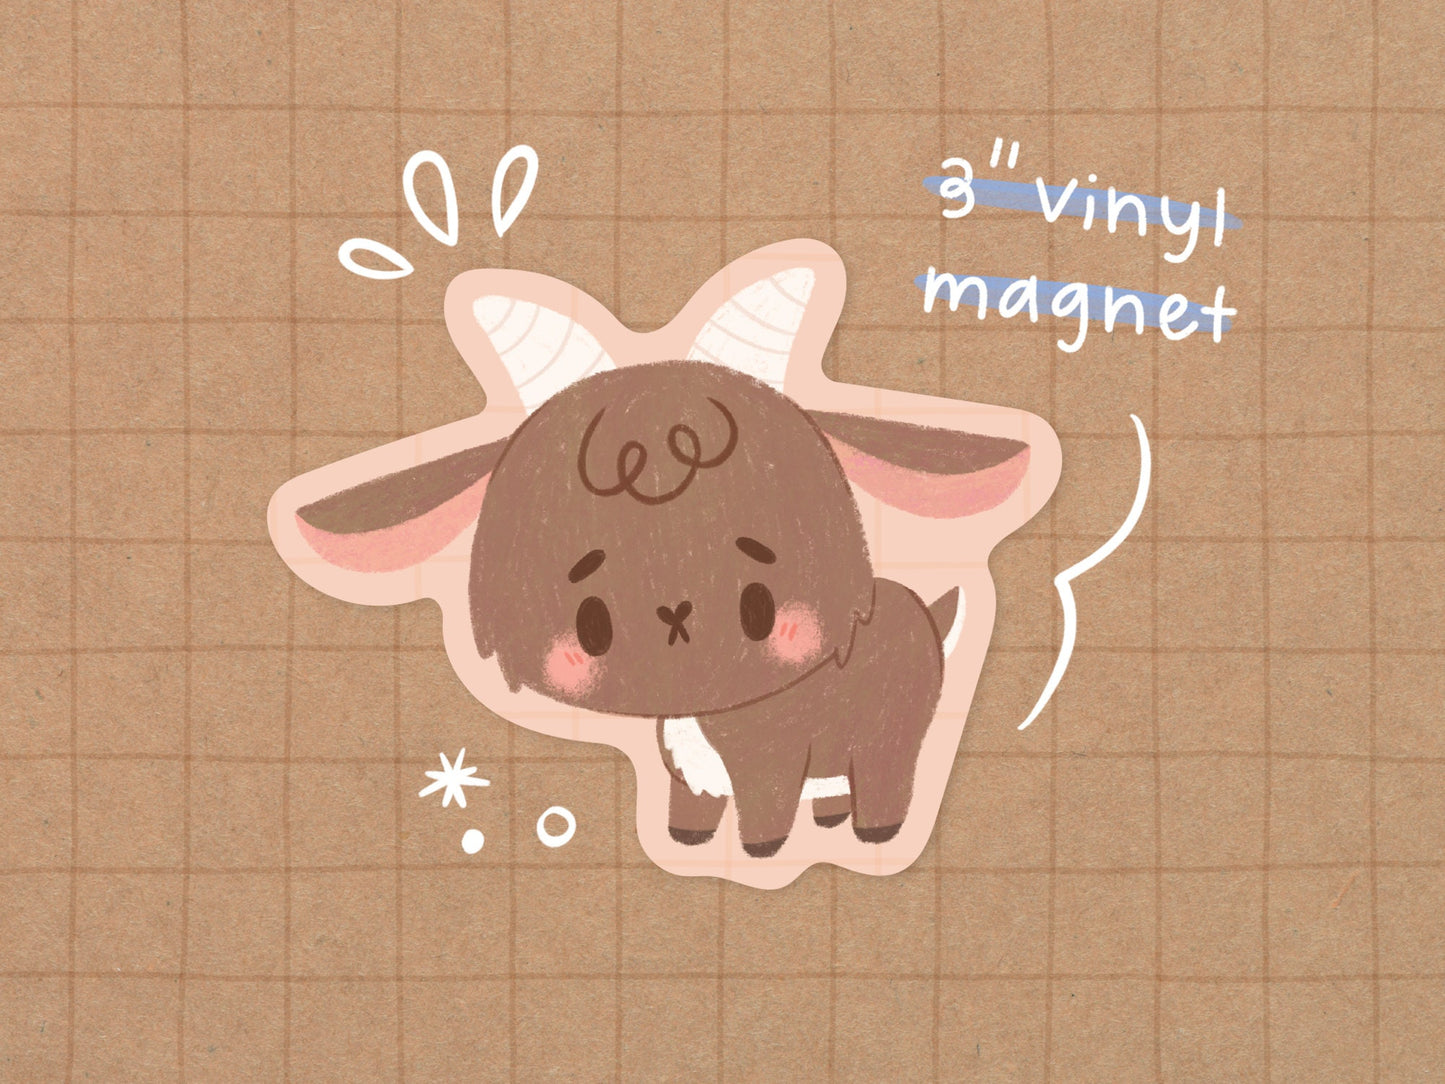 Baby Goat Vinyl Magnet